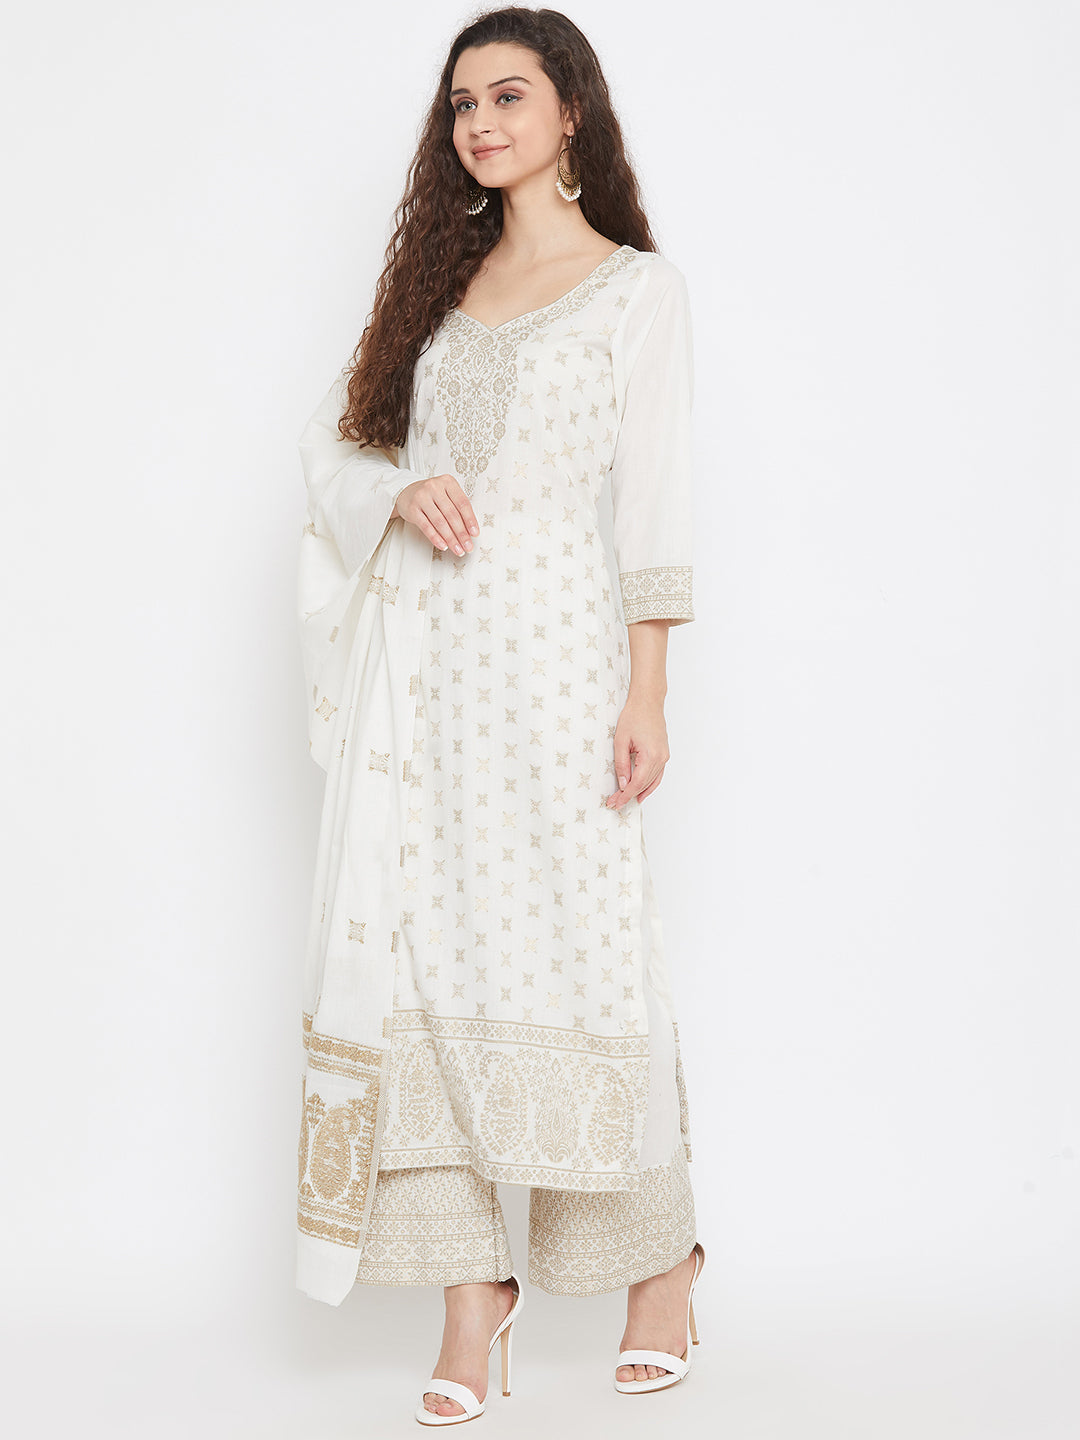 Cotton Jacquard Zari Woven White Dress Material with Cotton Silk Dupatta